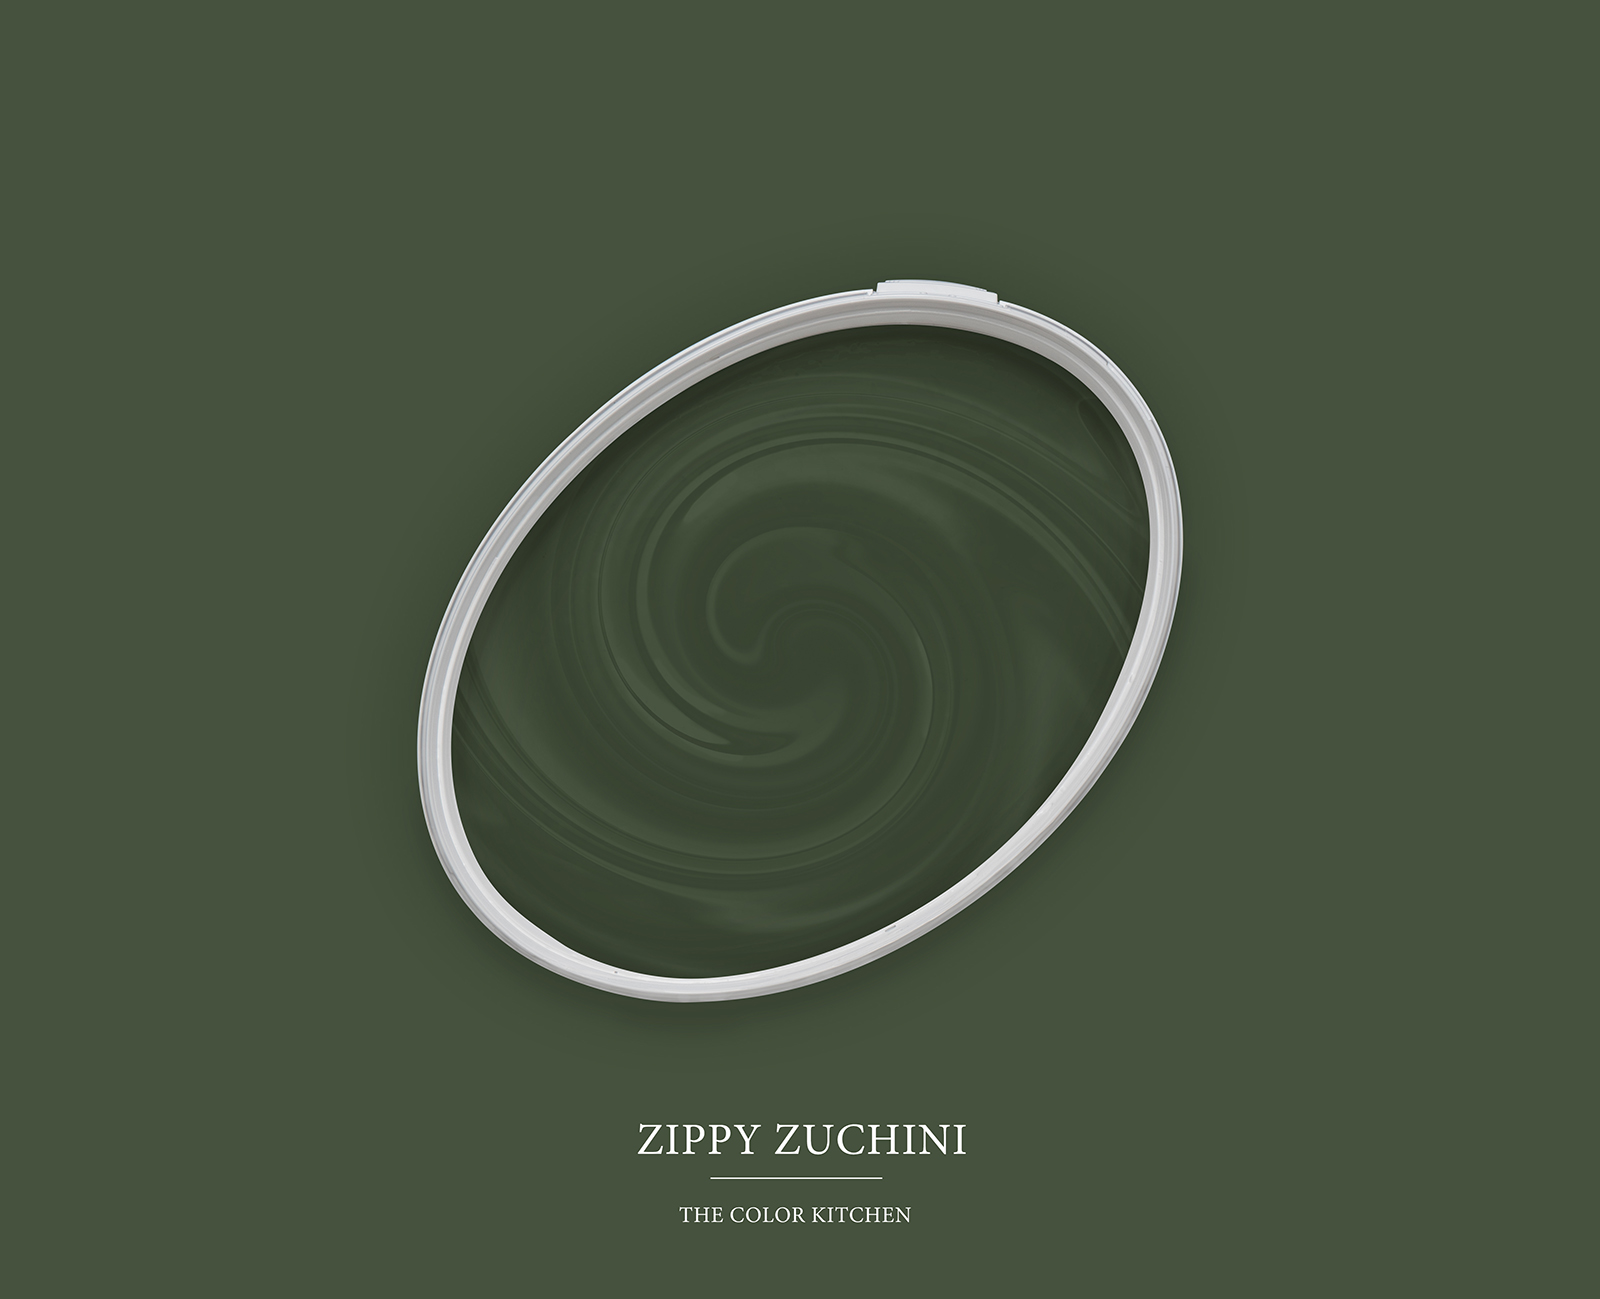 Muurverf TCK4006 »Zippy Zuchini« in intensief donkergroen – 5,0 liter
